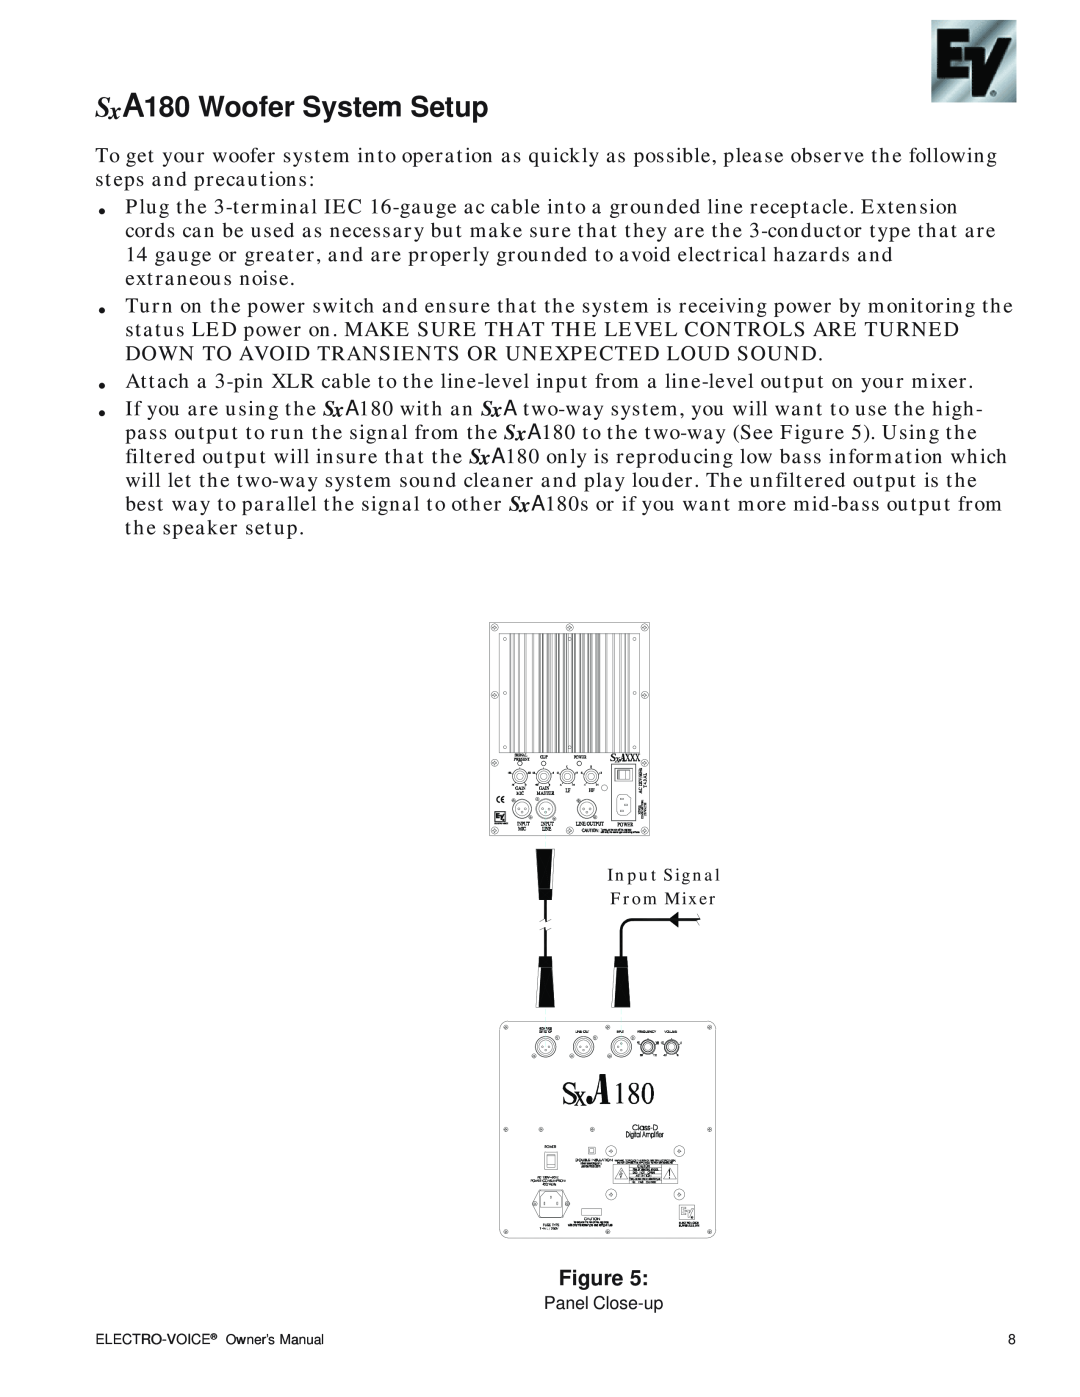 Electro-Voice SxA100+ owner manual SxA180 Woofer System Setup, Input Signal FromMixer 